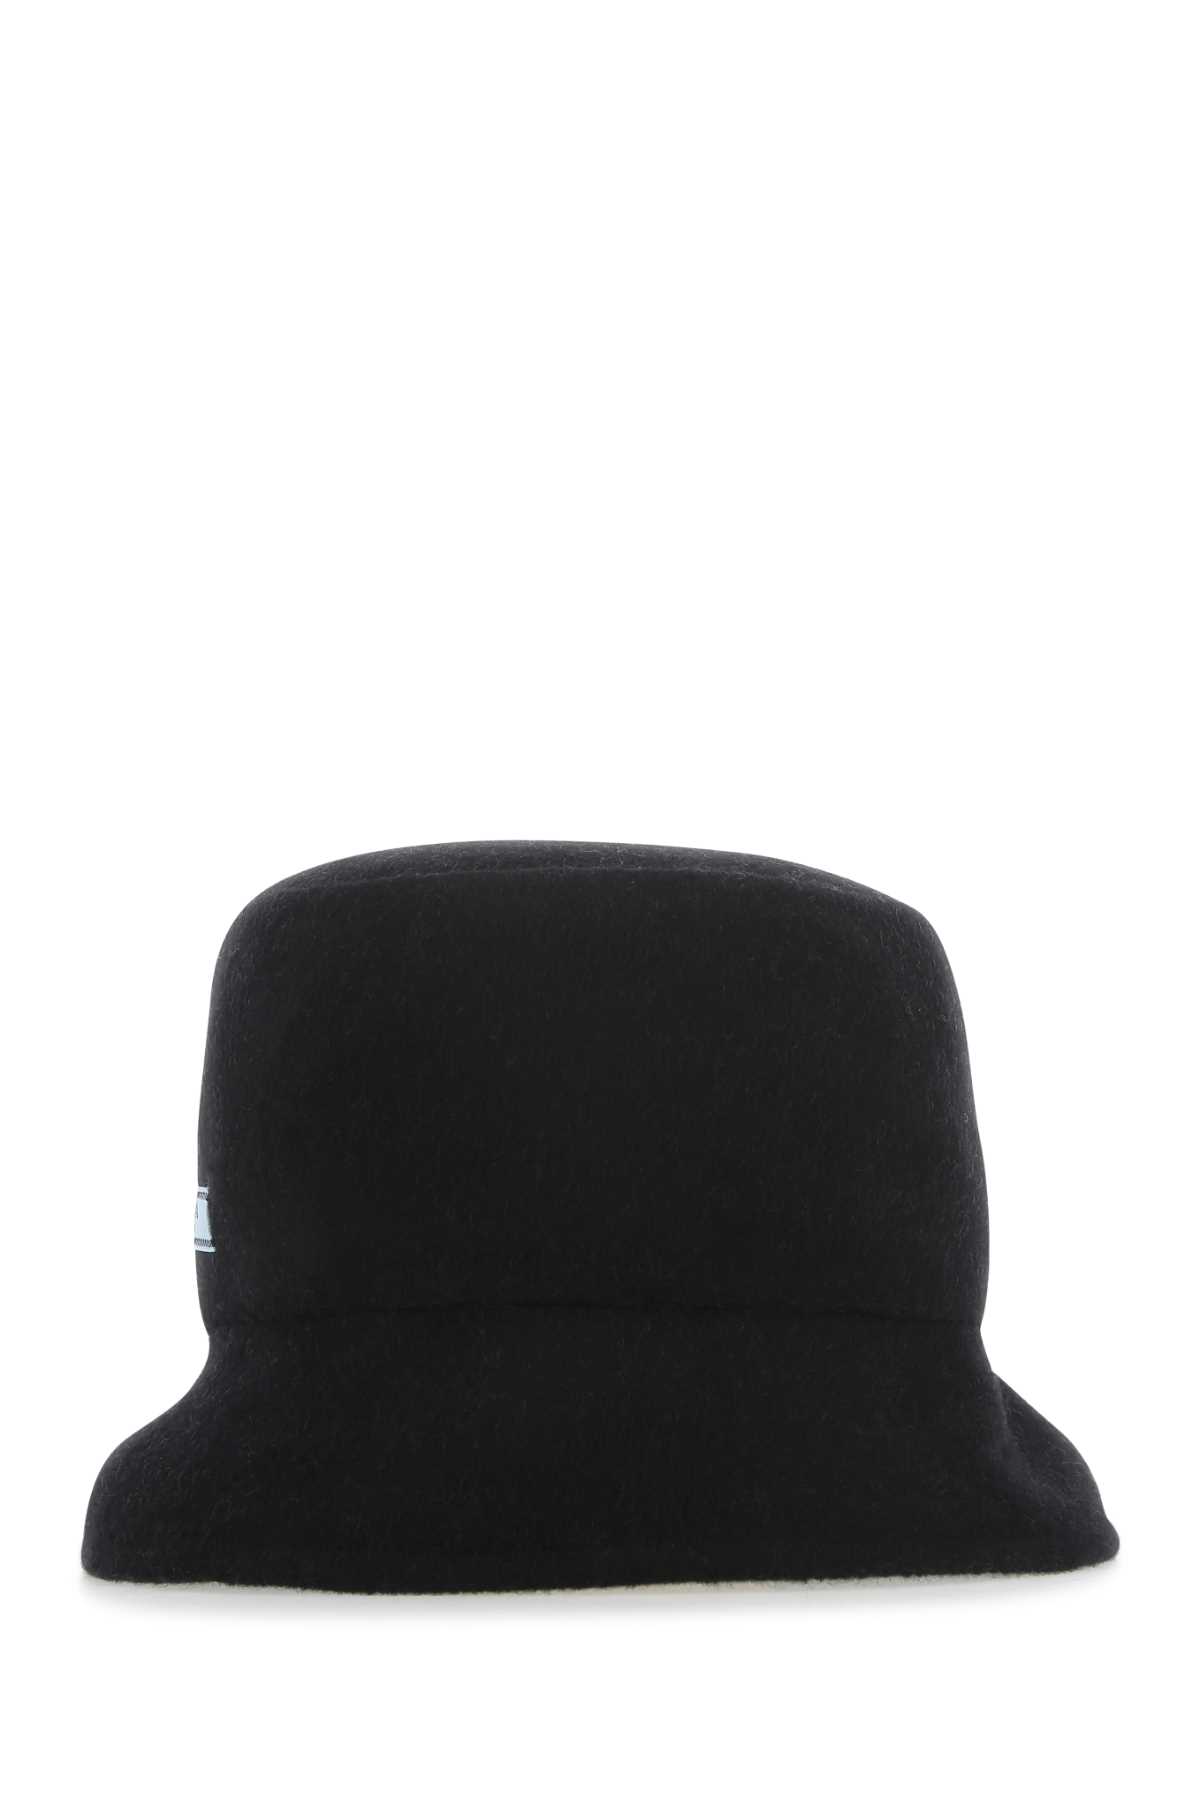 Prada Black Cashmere Hat